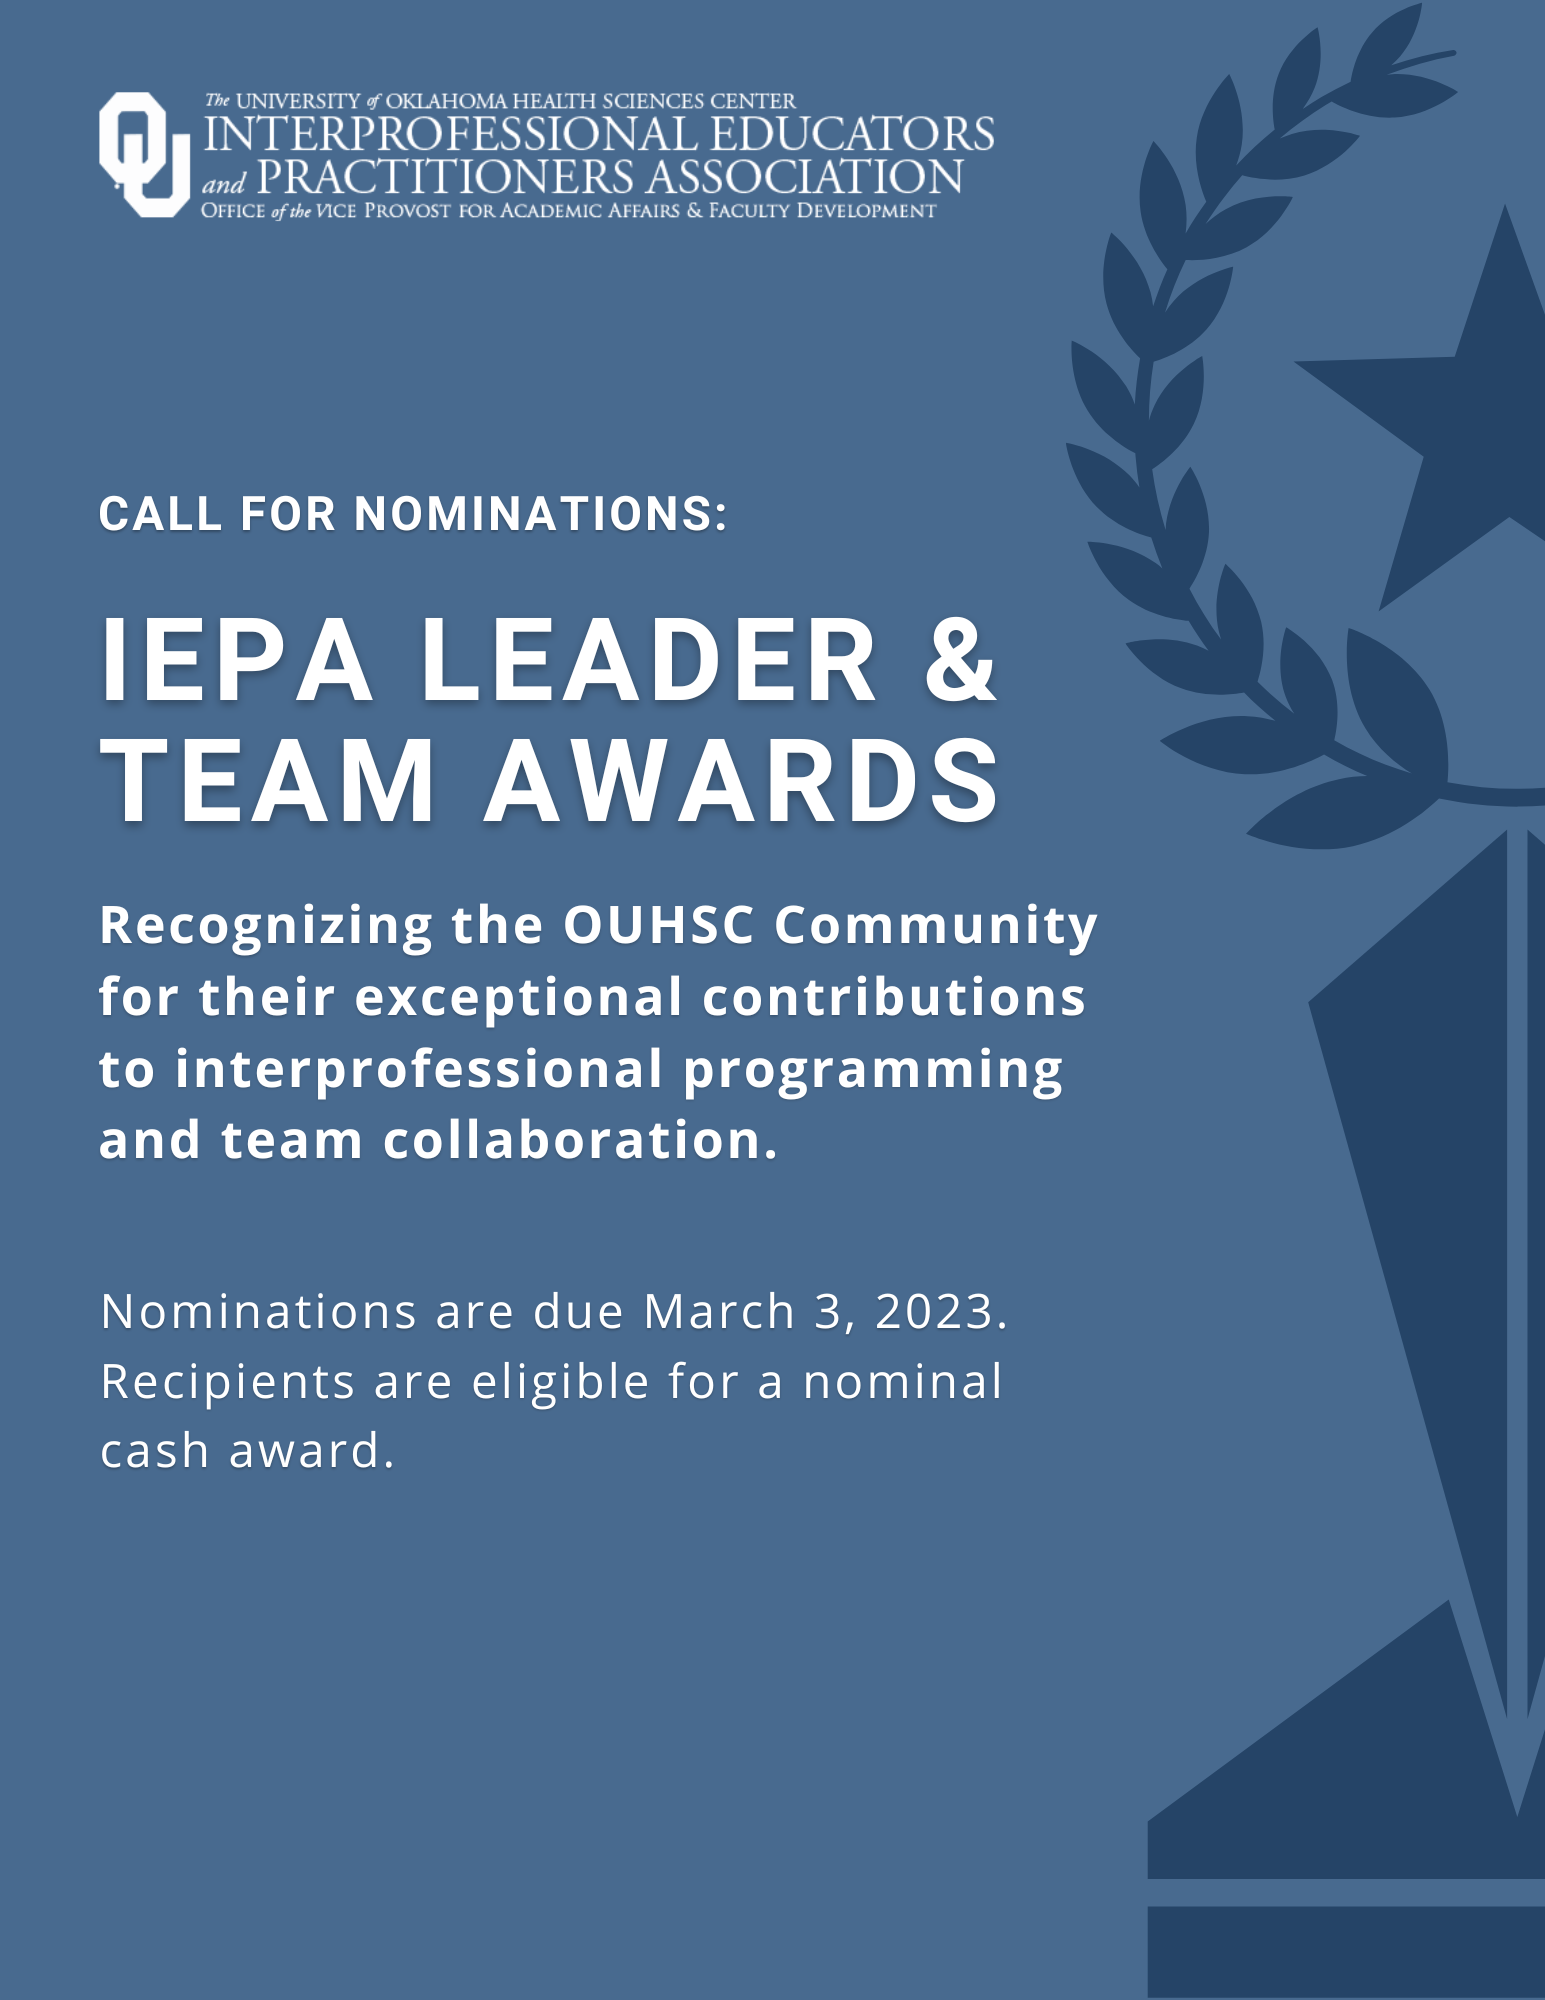 IPE Leader & Team Awards